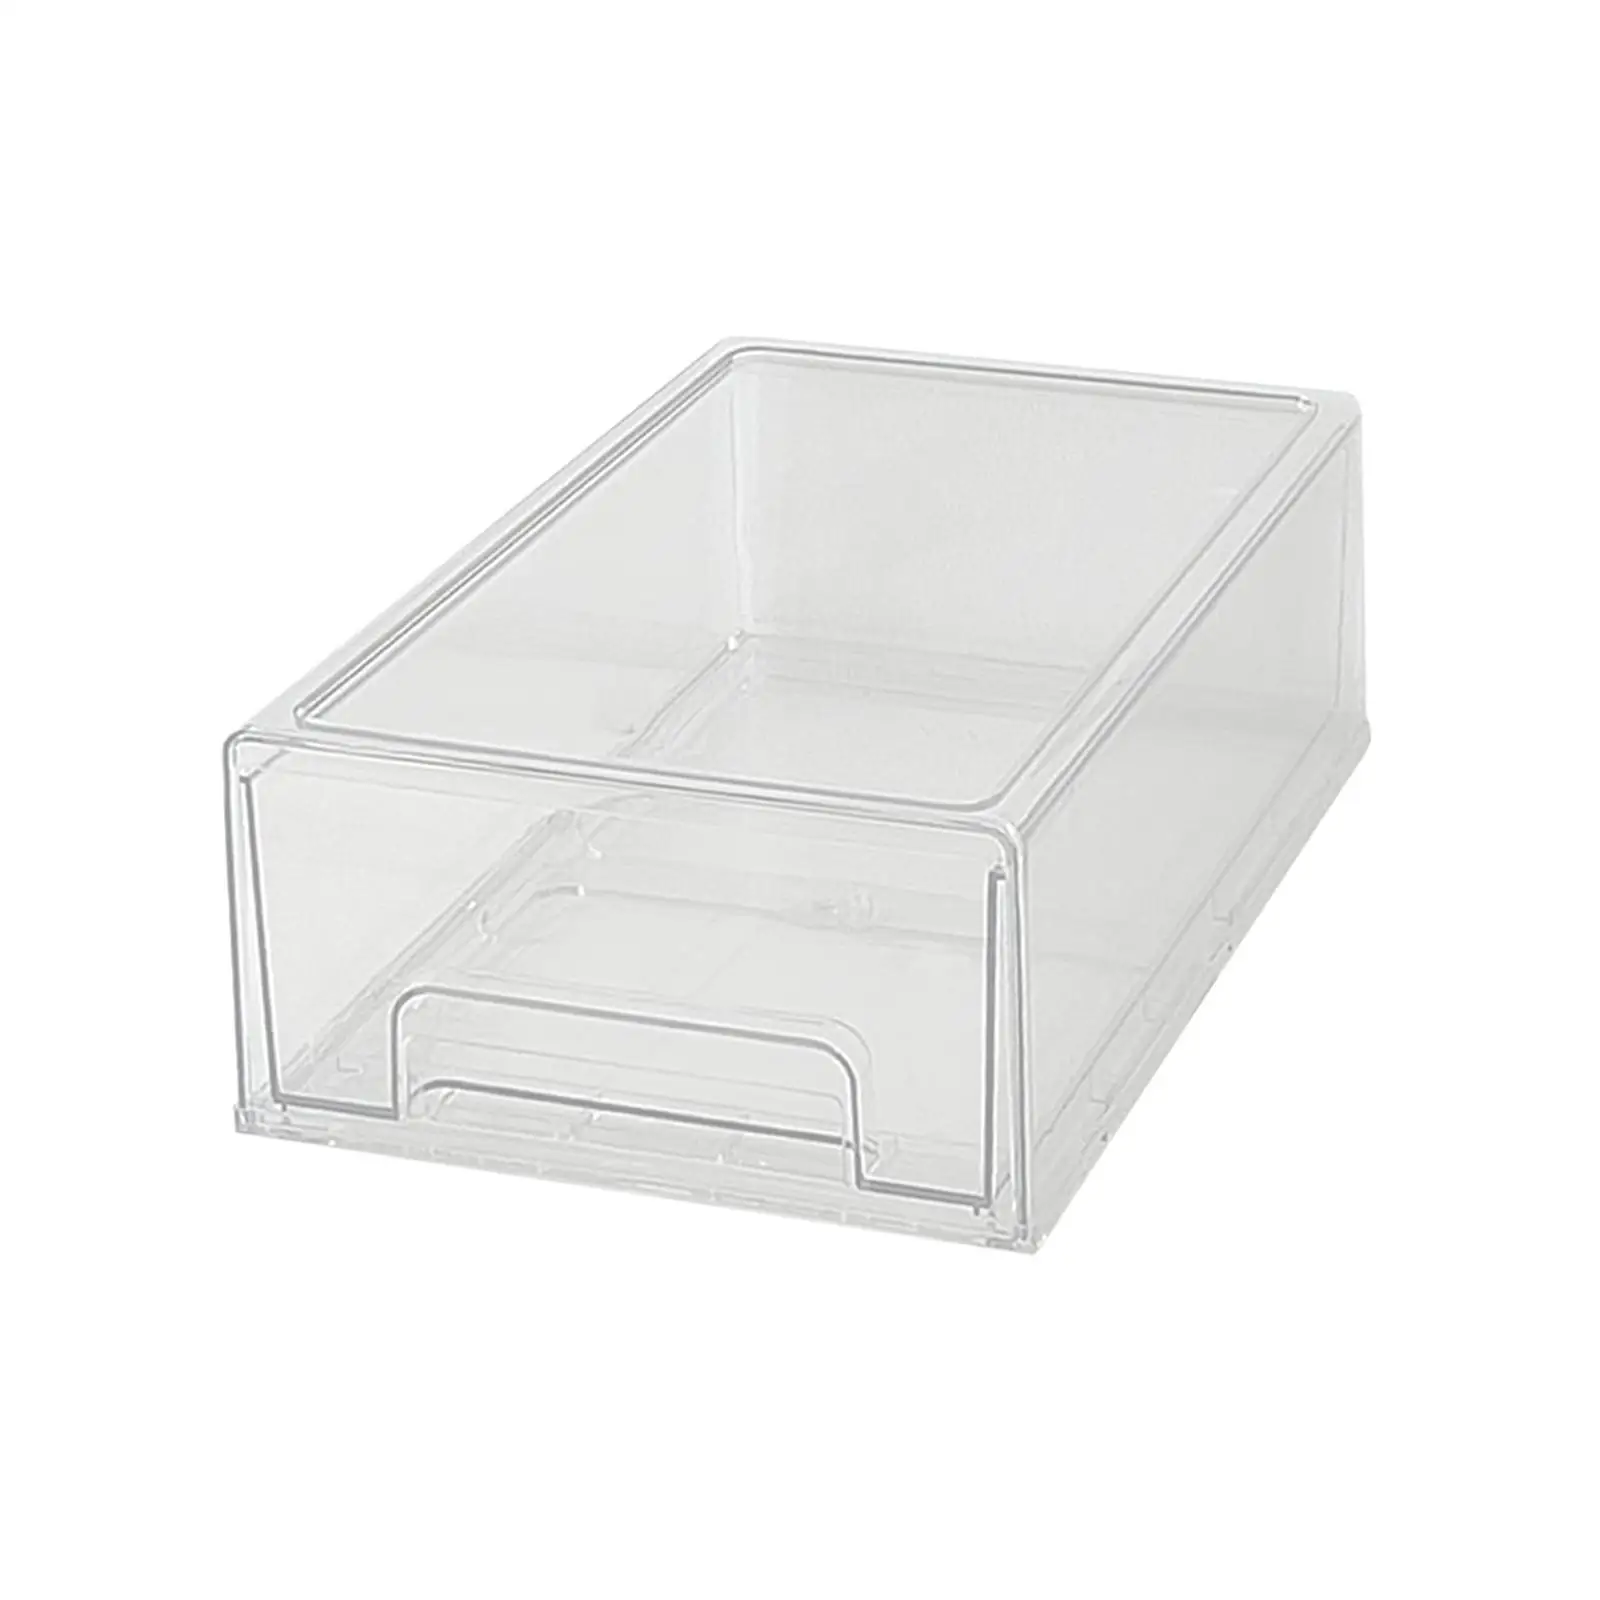 Acrylic Storage Drawer Case Transparent Waterproof Clear Desktop Drawer Organizer for Dresser Closet Countertop Office Desktop